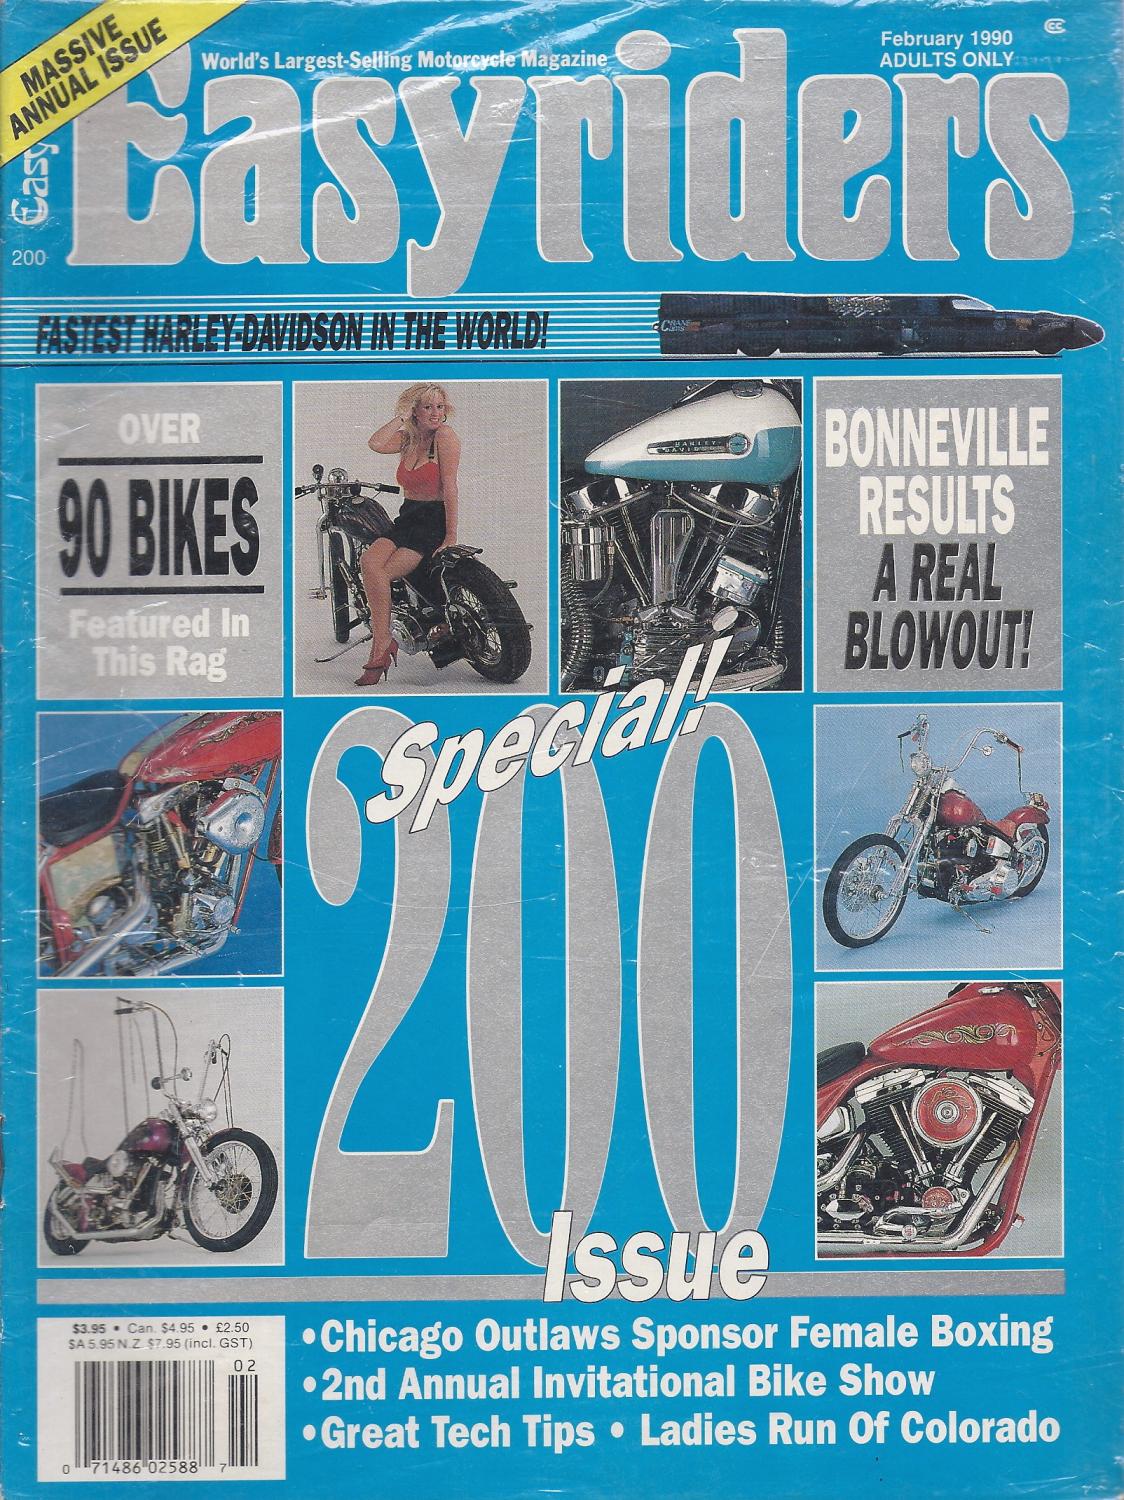 APRIL 1977 EASYRIDERS motorcycle magazine.